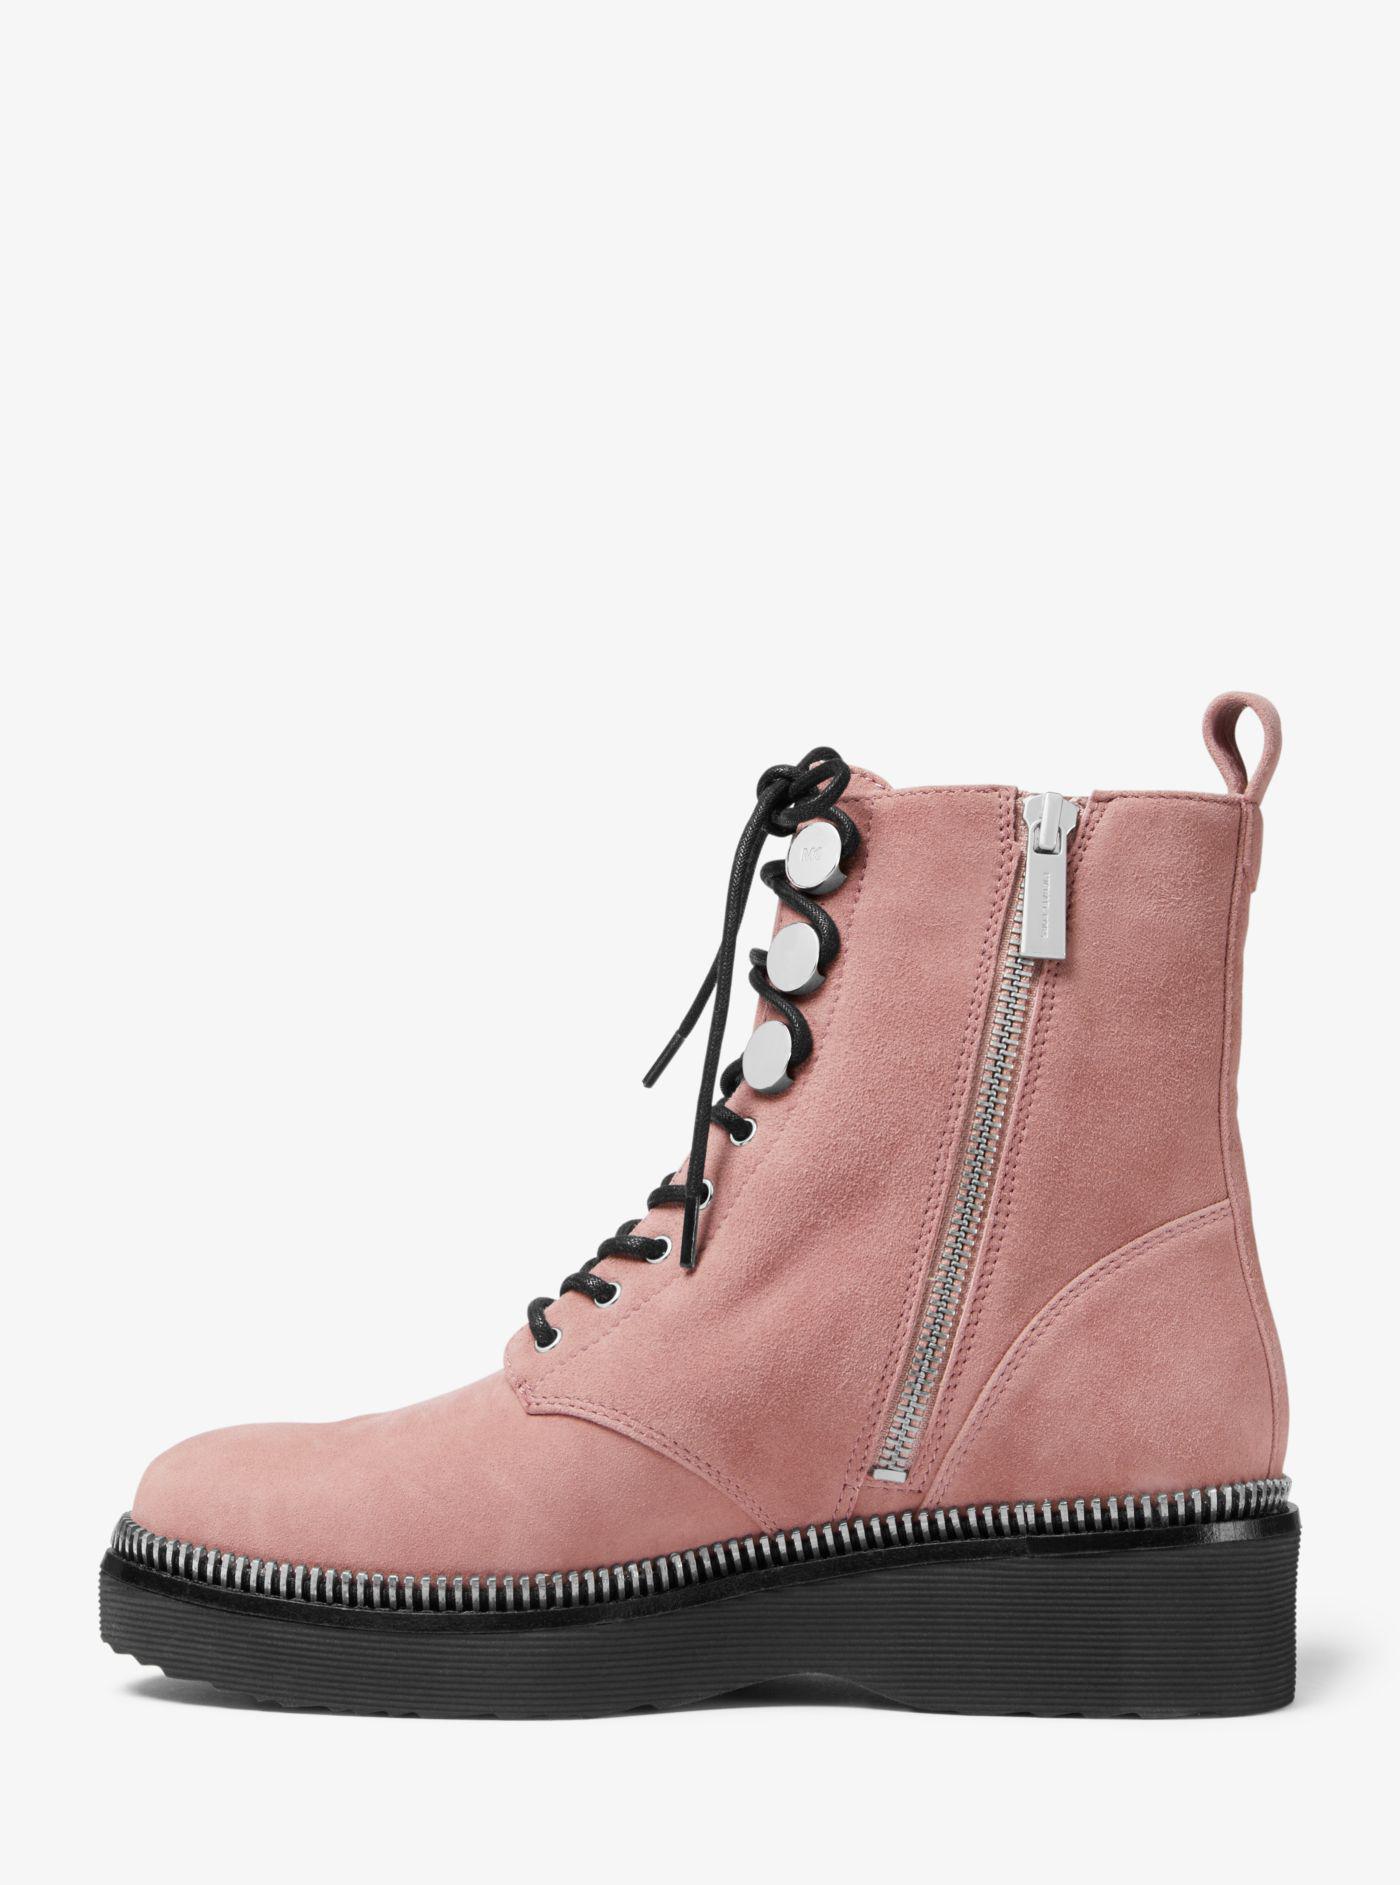 michael kors pink boots